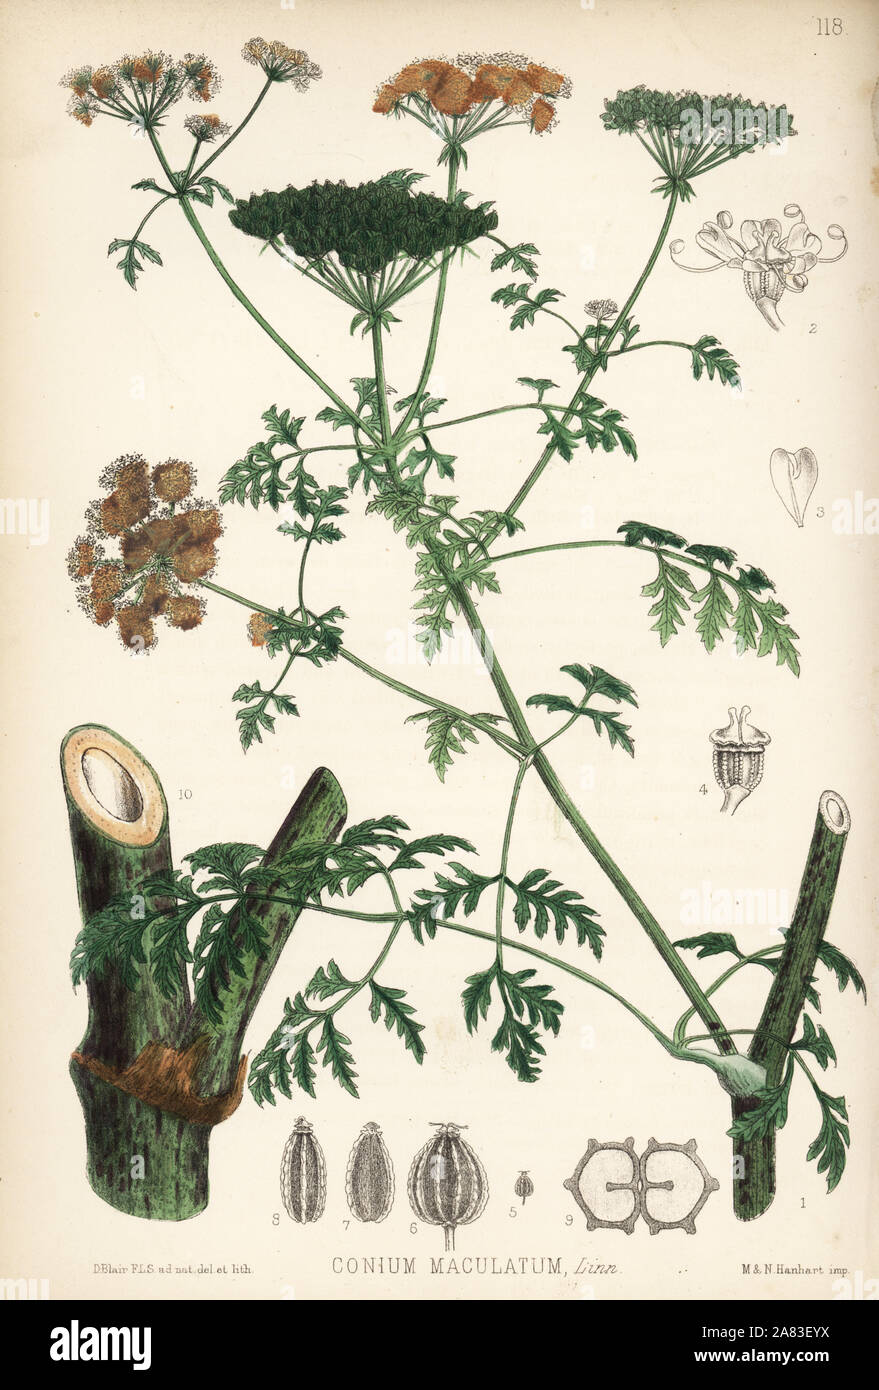 Poison hemlock, Conium maculatum. Litografia Handcolored da Hanhart dopo una illustrazione botanica da David Blair da Robert Bentley e Henry Trimen di piante medicinali, Londra, 1880. Foto Stock